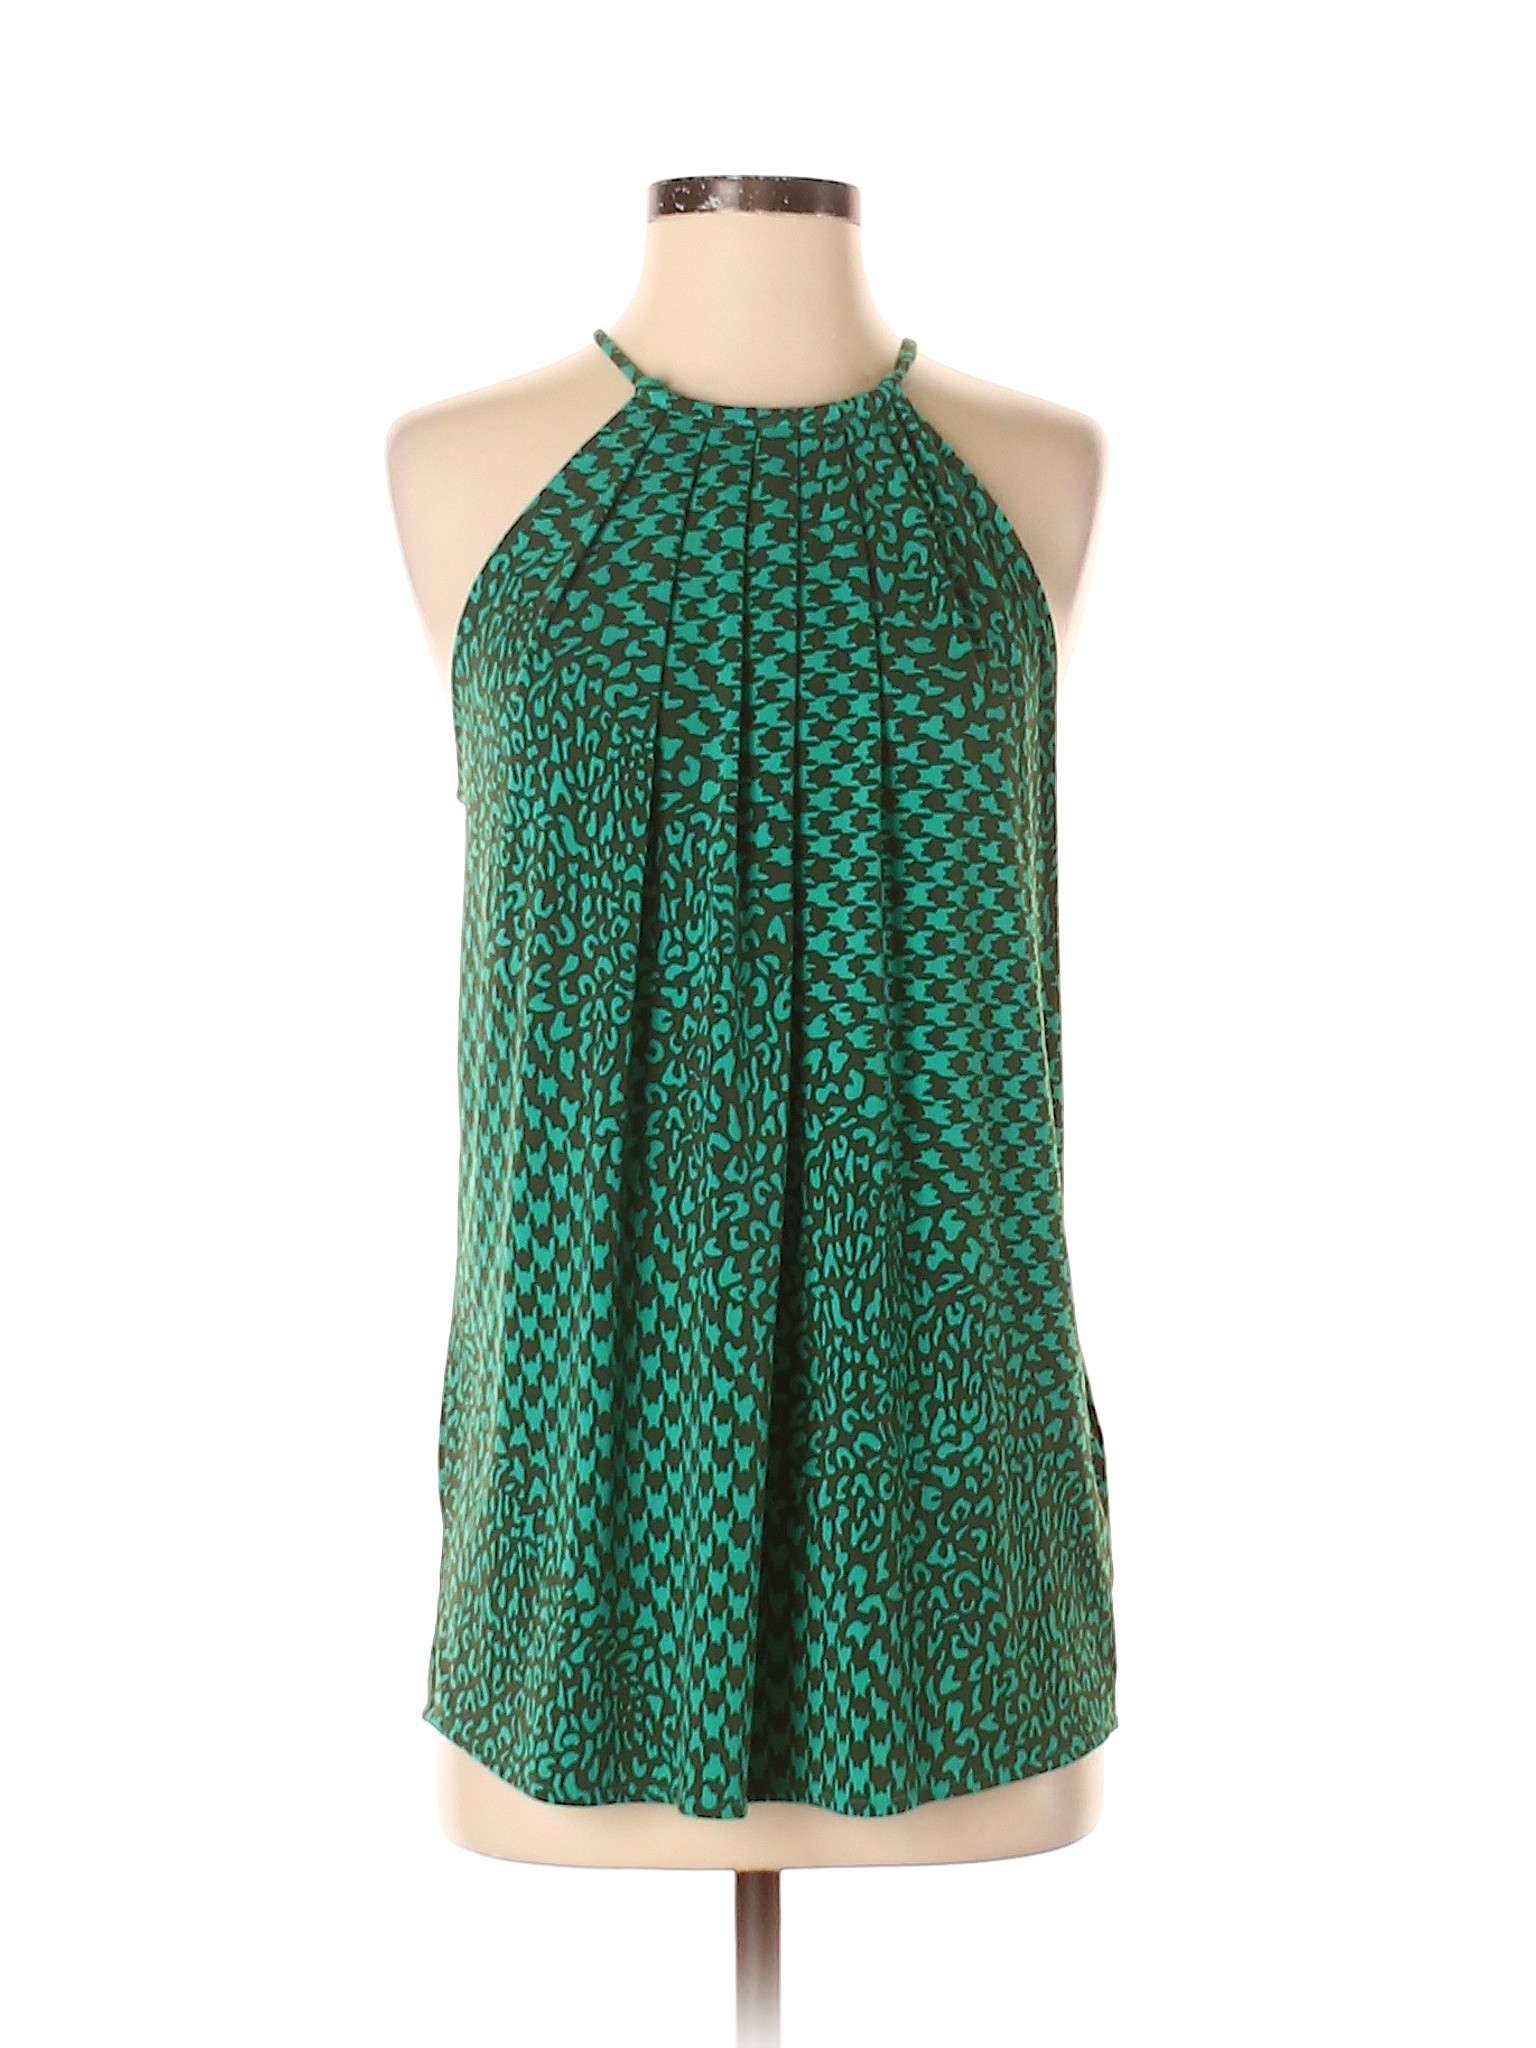 Banana Republic Factory Store Women Green Sleeveless Top S | eBay